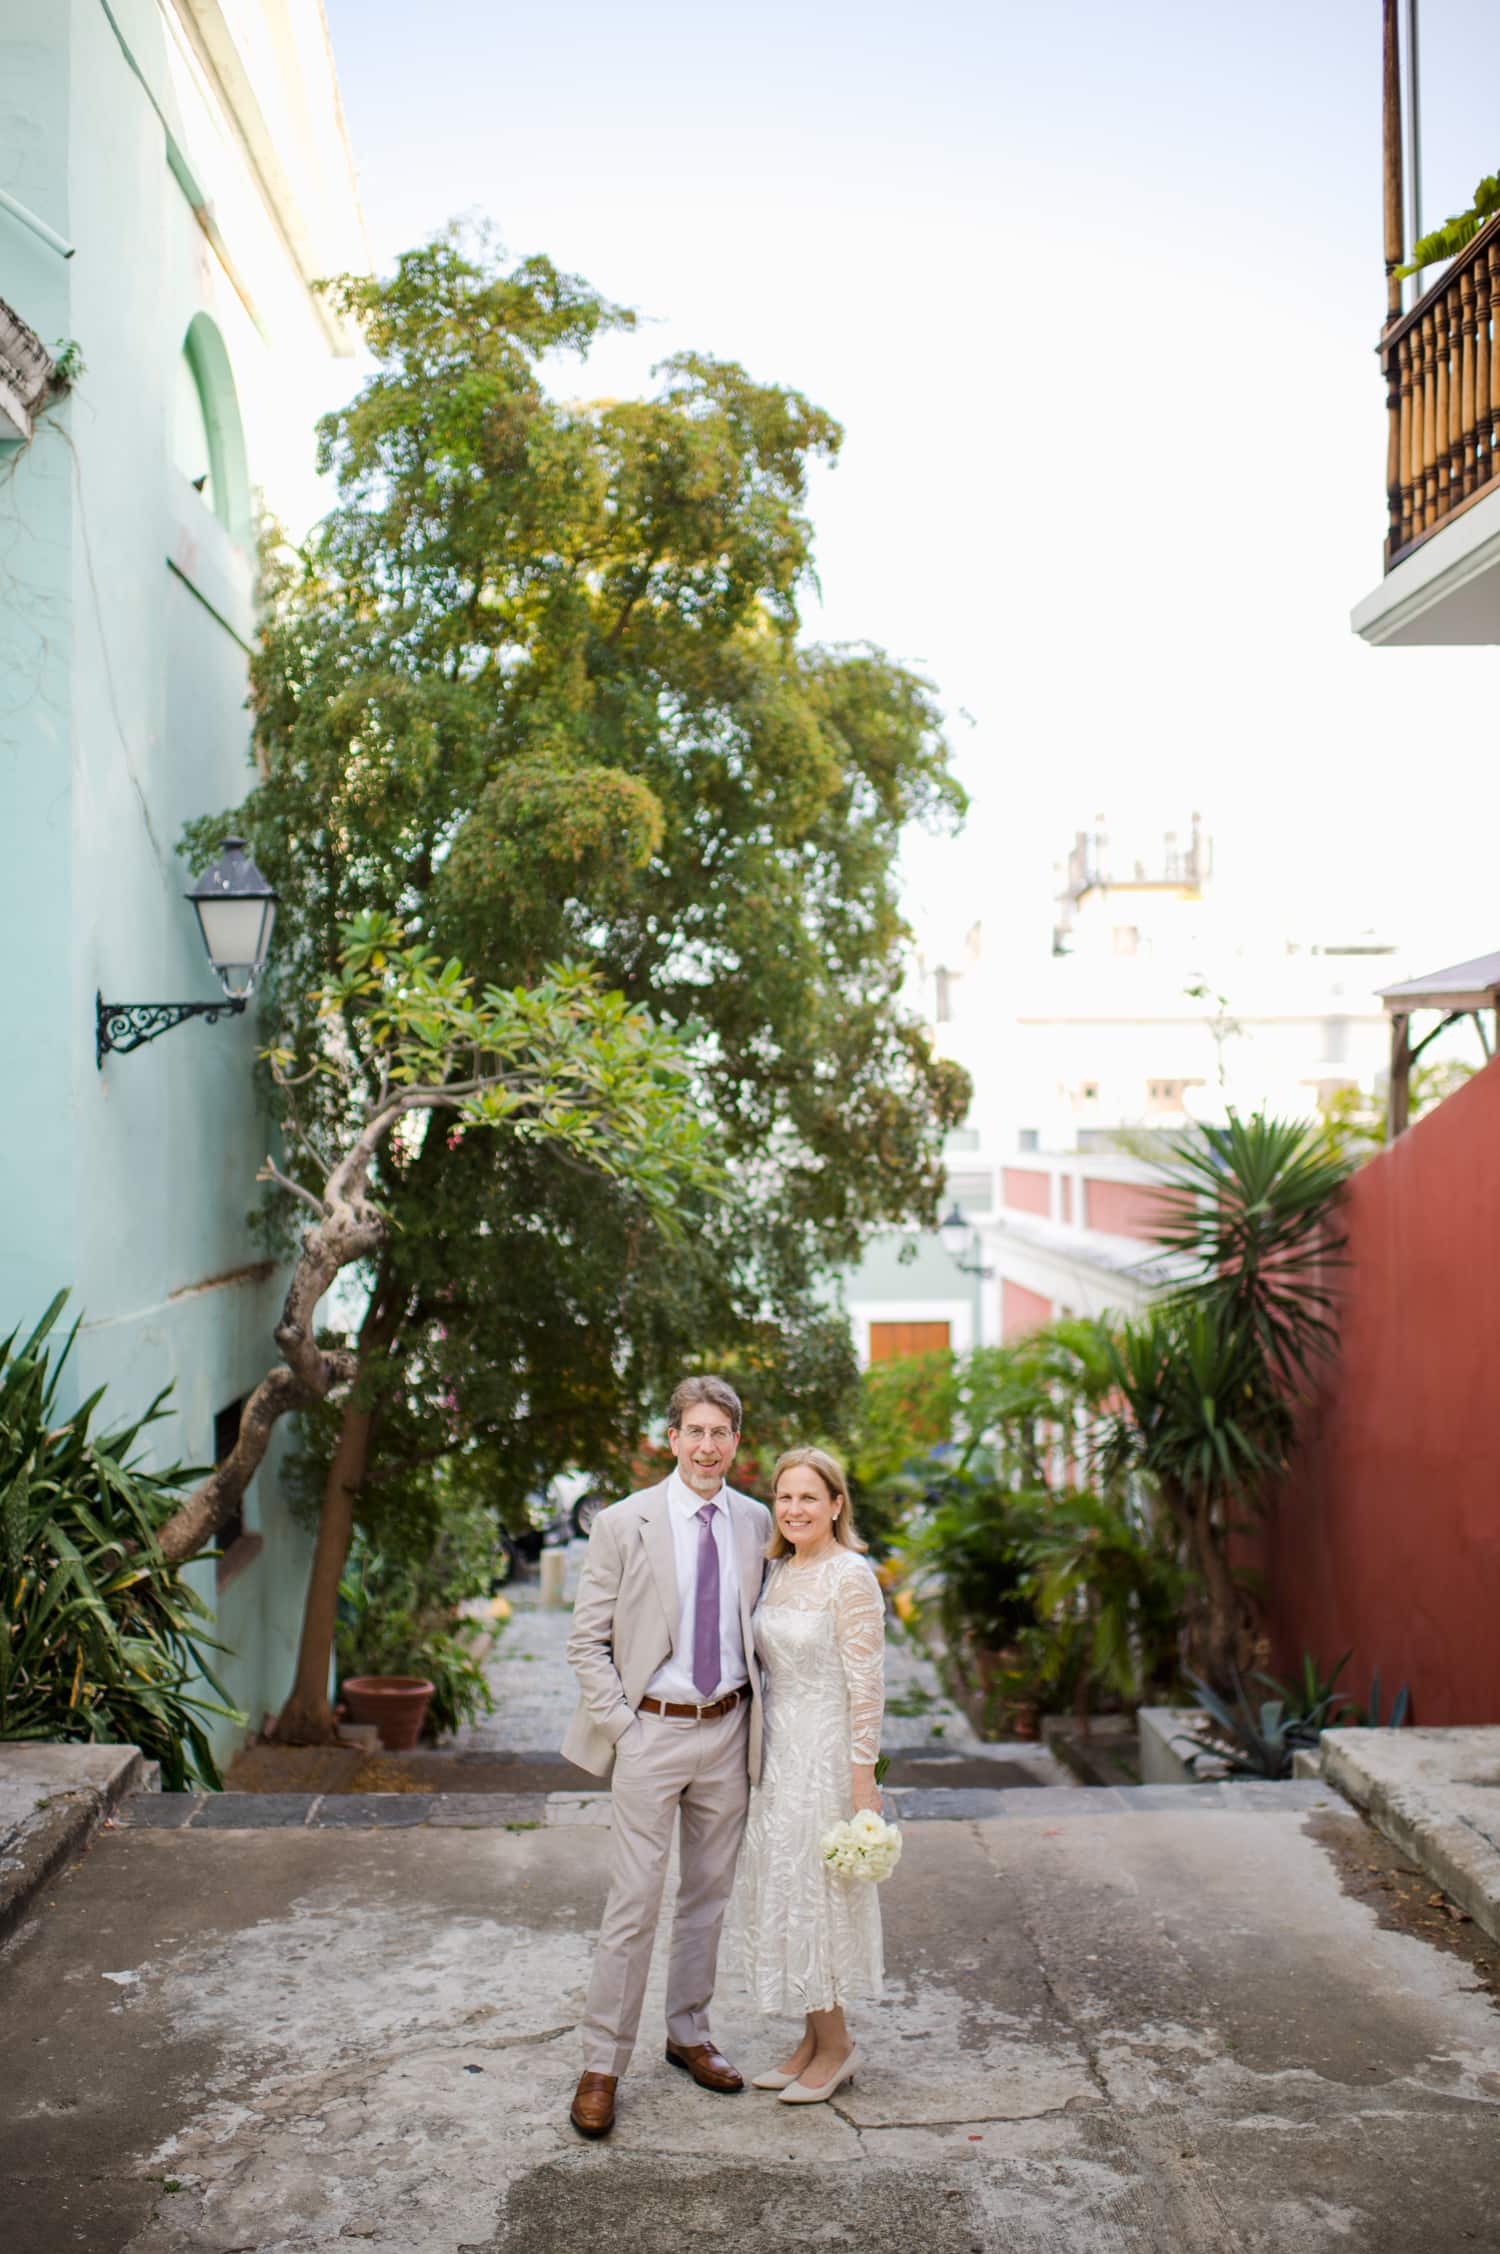 Puerto Rico elopement photos at Condado Vanderbilt Old San Juan by Camille Fontanez photography